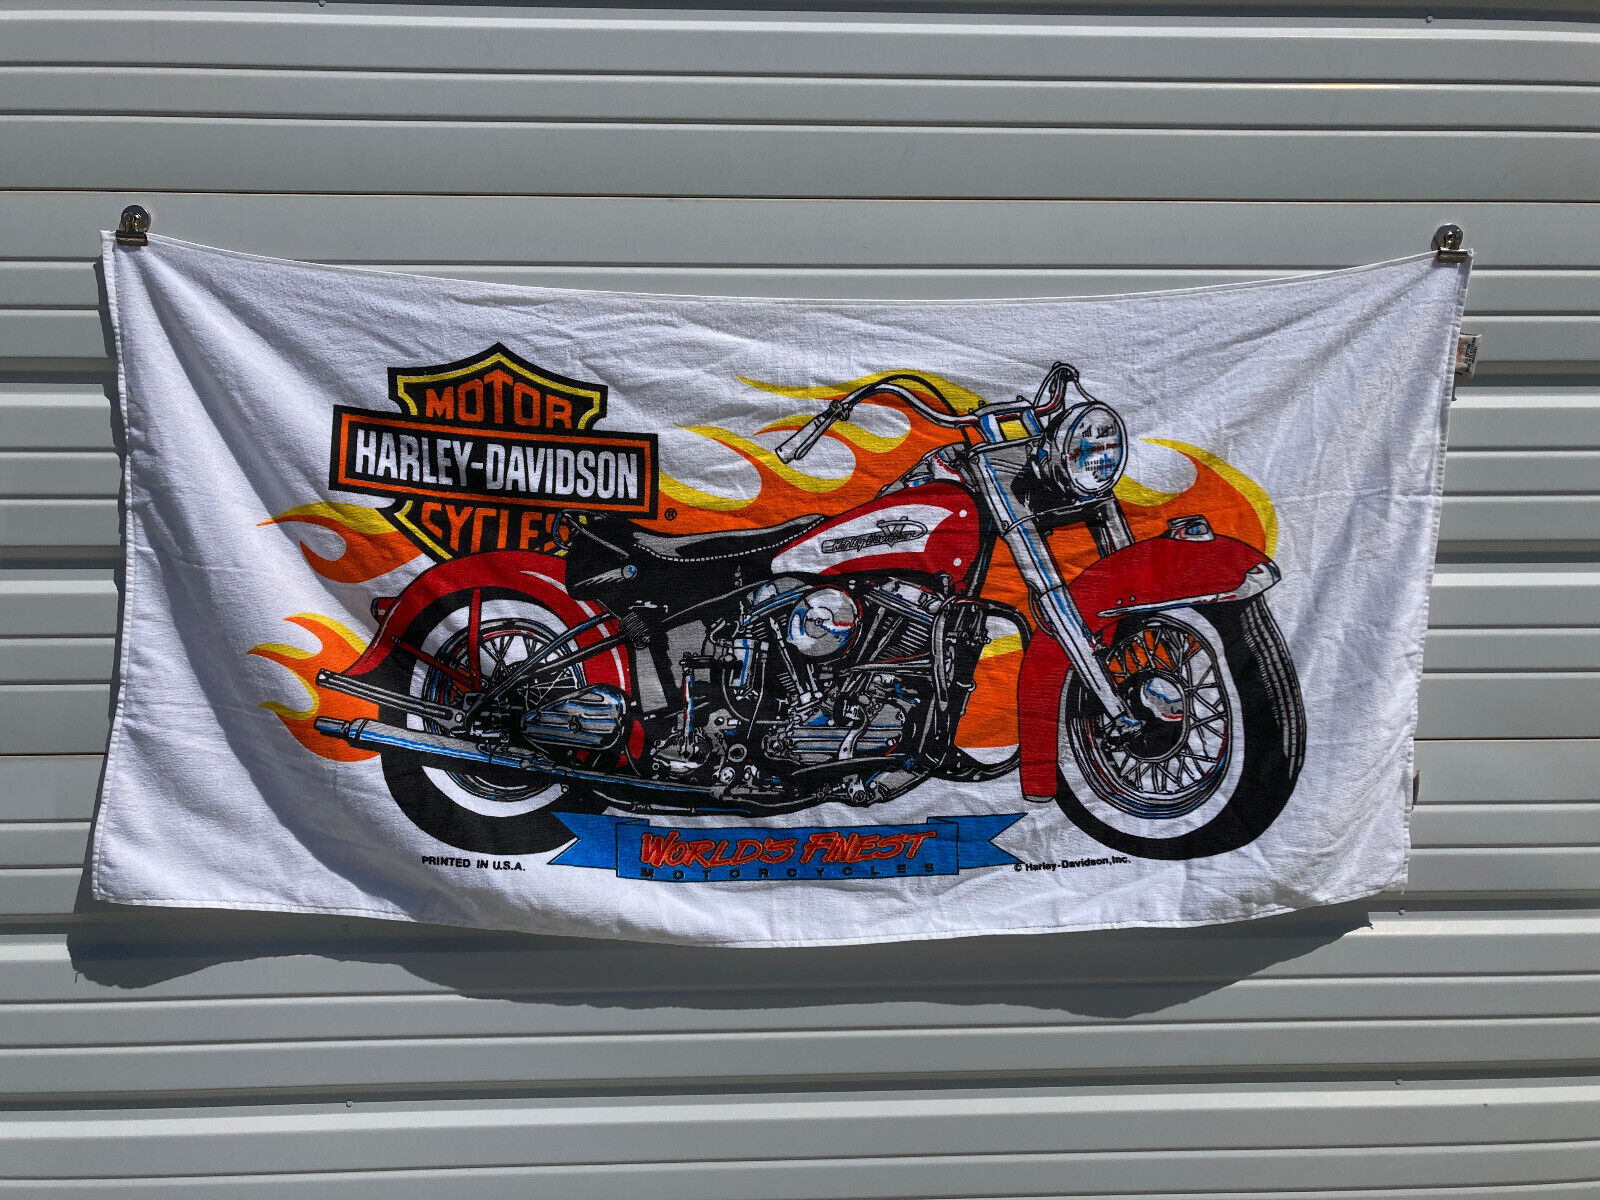 Harley Davidson Beach Towel - Franco Made In The USA - White - Vibrant